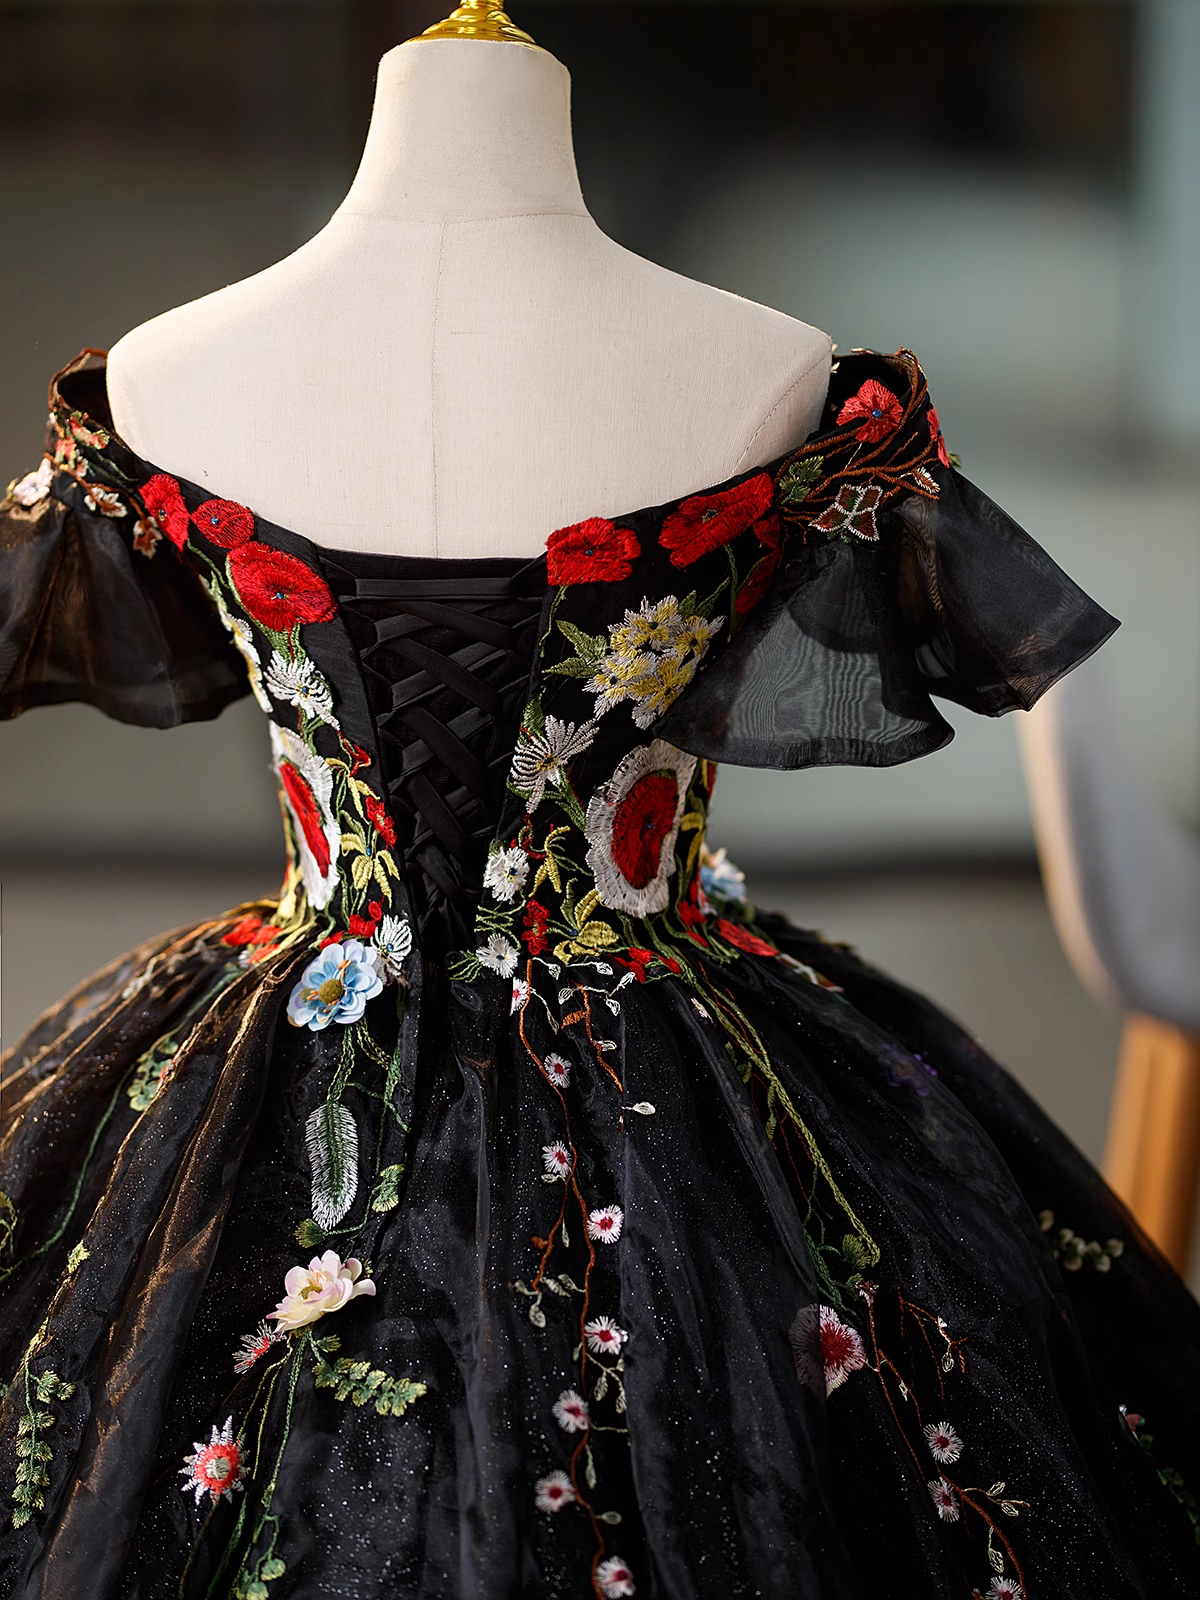 Black Off Shoulder Sweet 16 Dresses with Flowers, Black Ball Gown Formal Dress